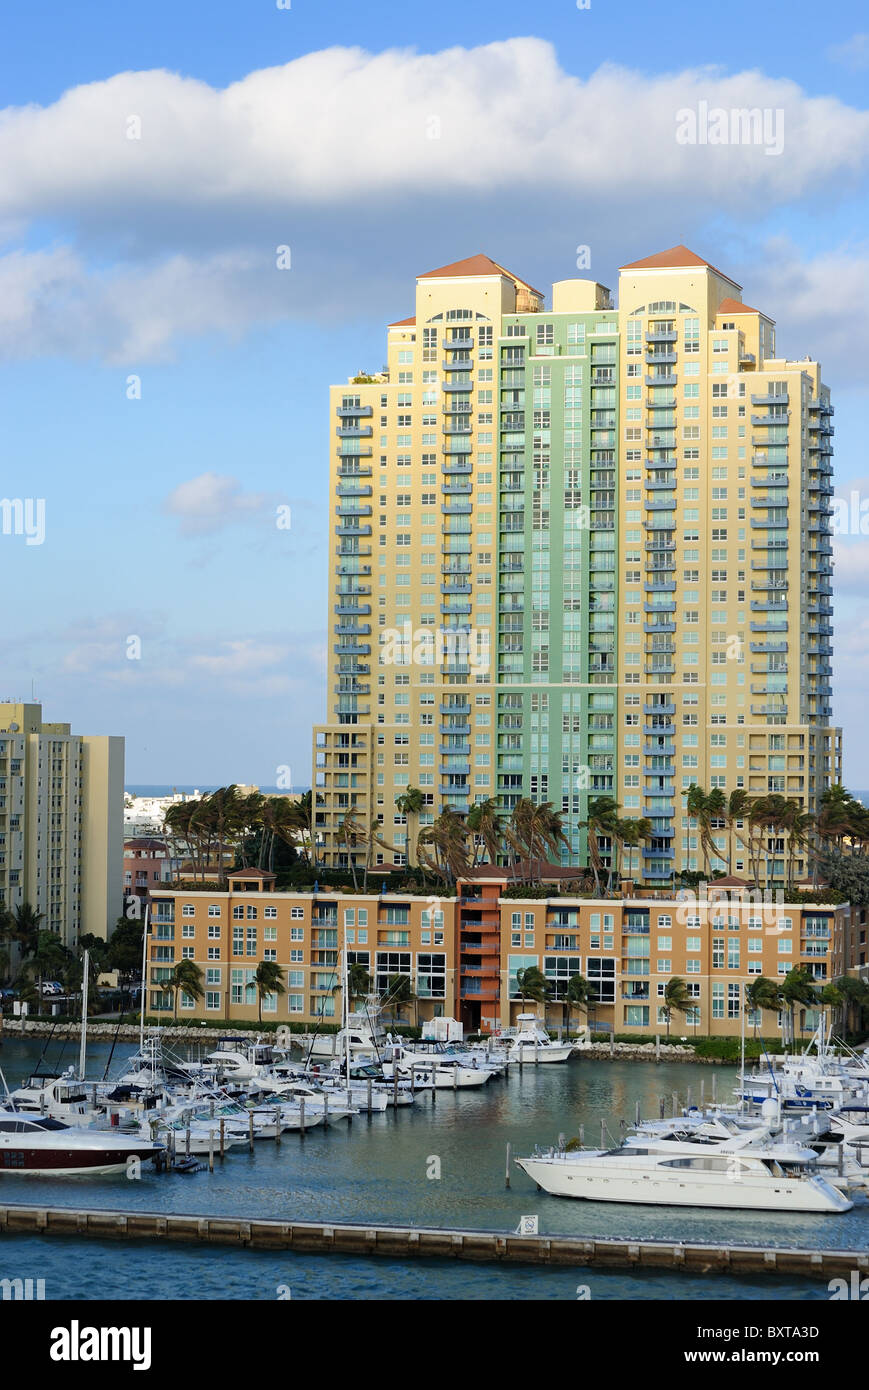 Skyline of the city of Miami, Florida along South Beach. Stock Photo